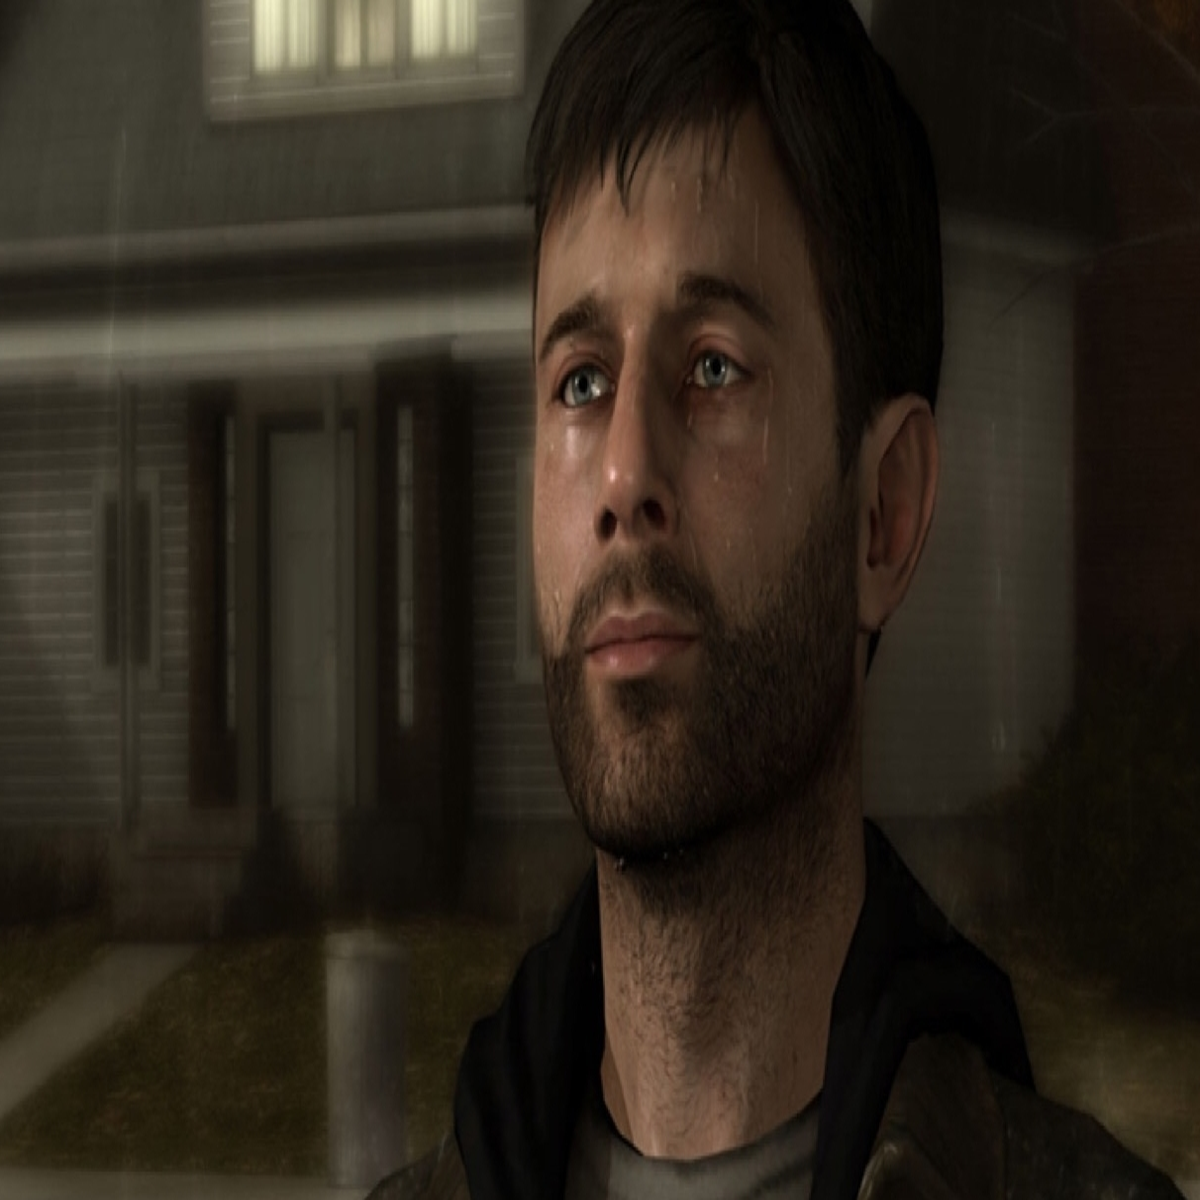 Detroit: Become Human, Heavy Rain, Beyond: Two Souls hitting PC in 2019 -  Polygon